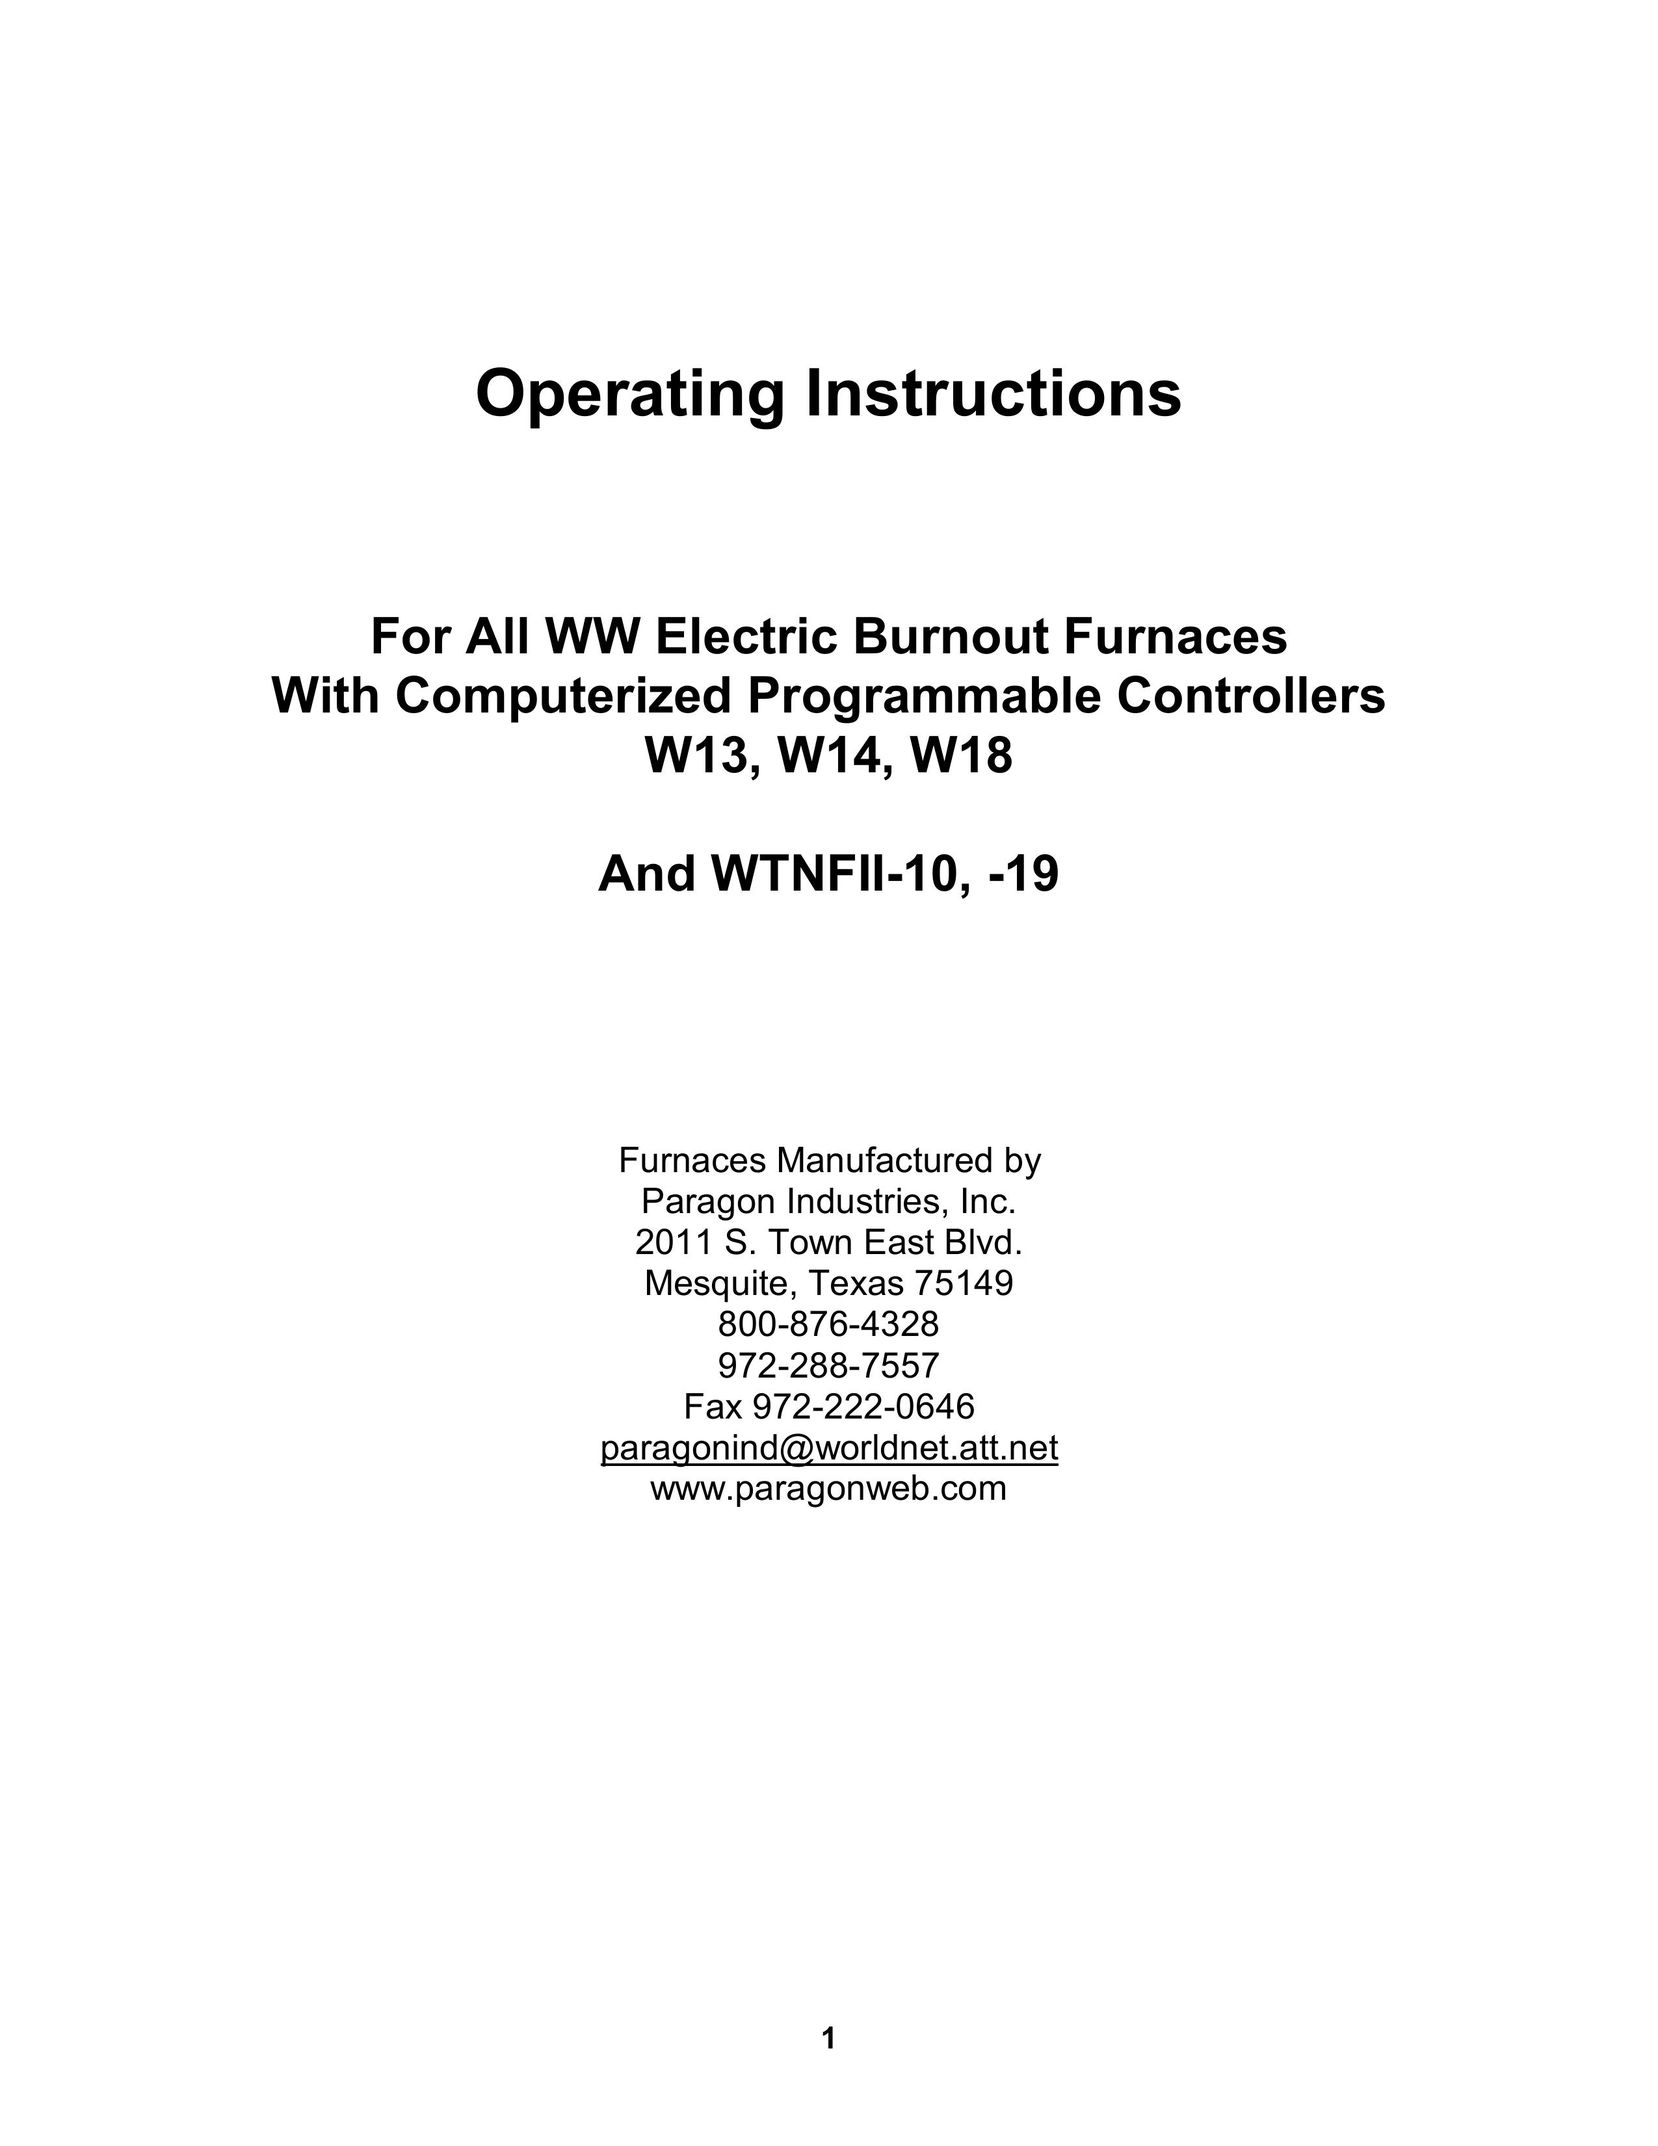 Paragon WTNFII-19 Furnace User Manual